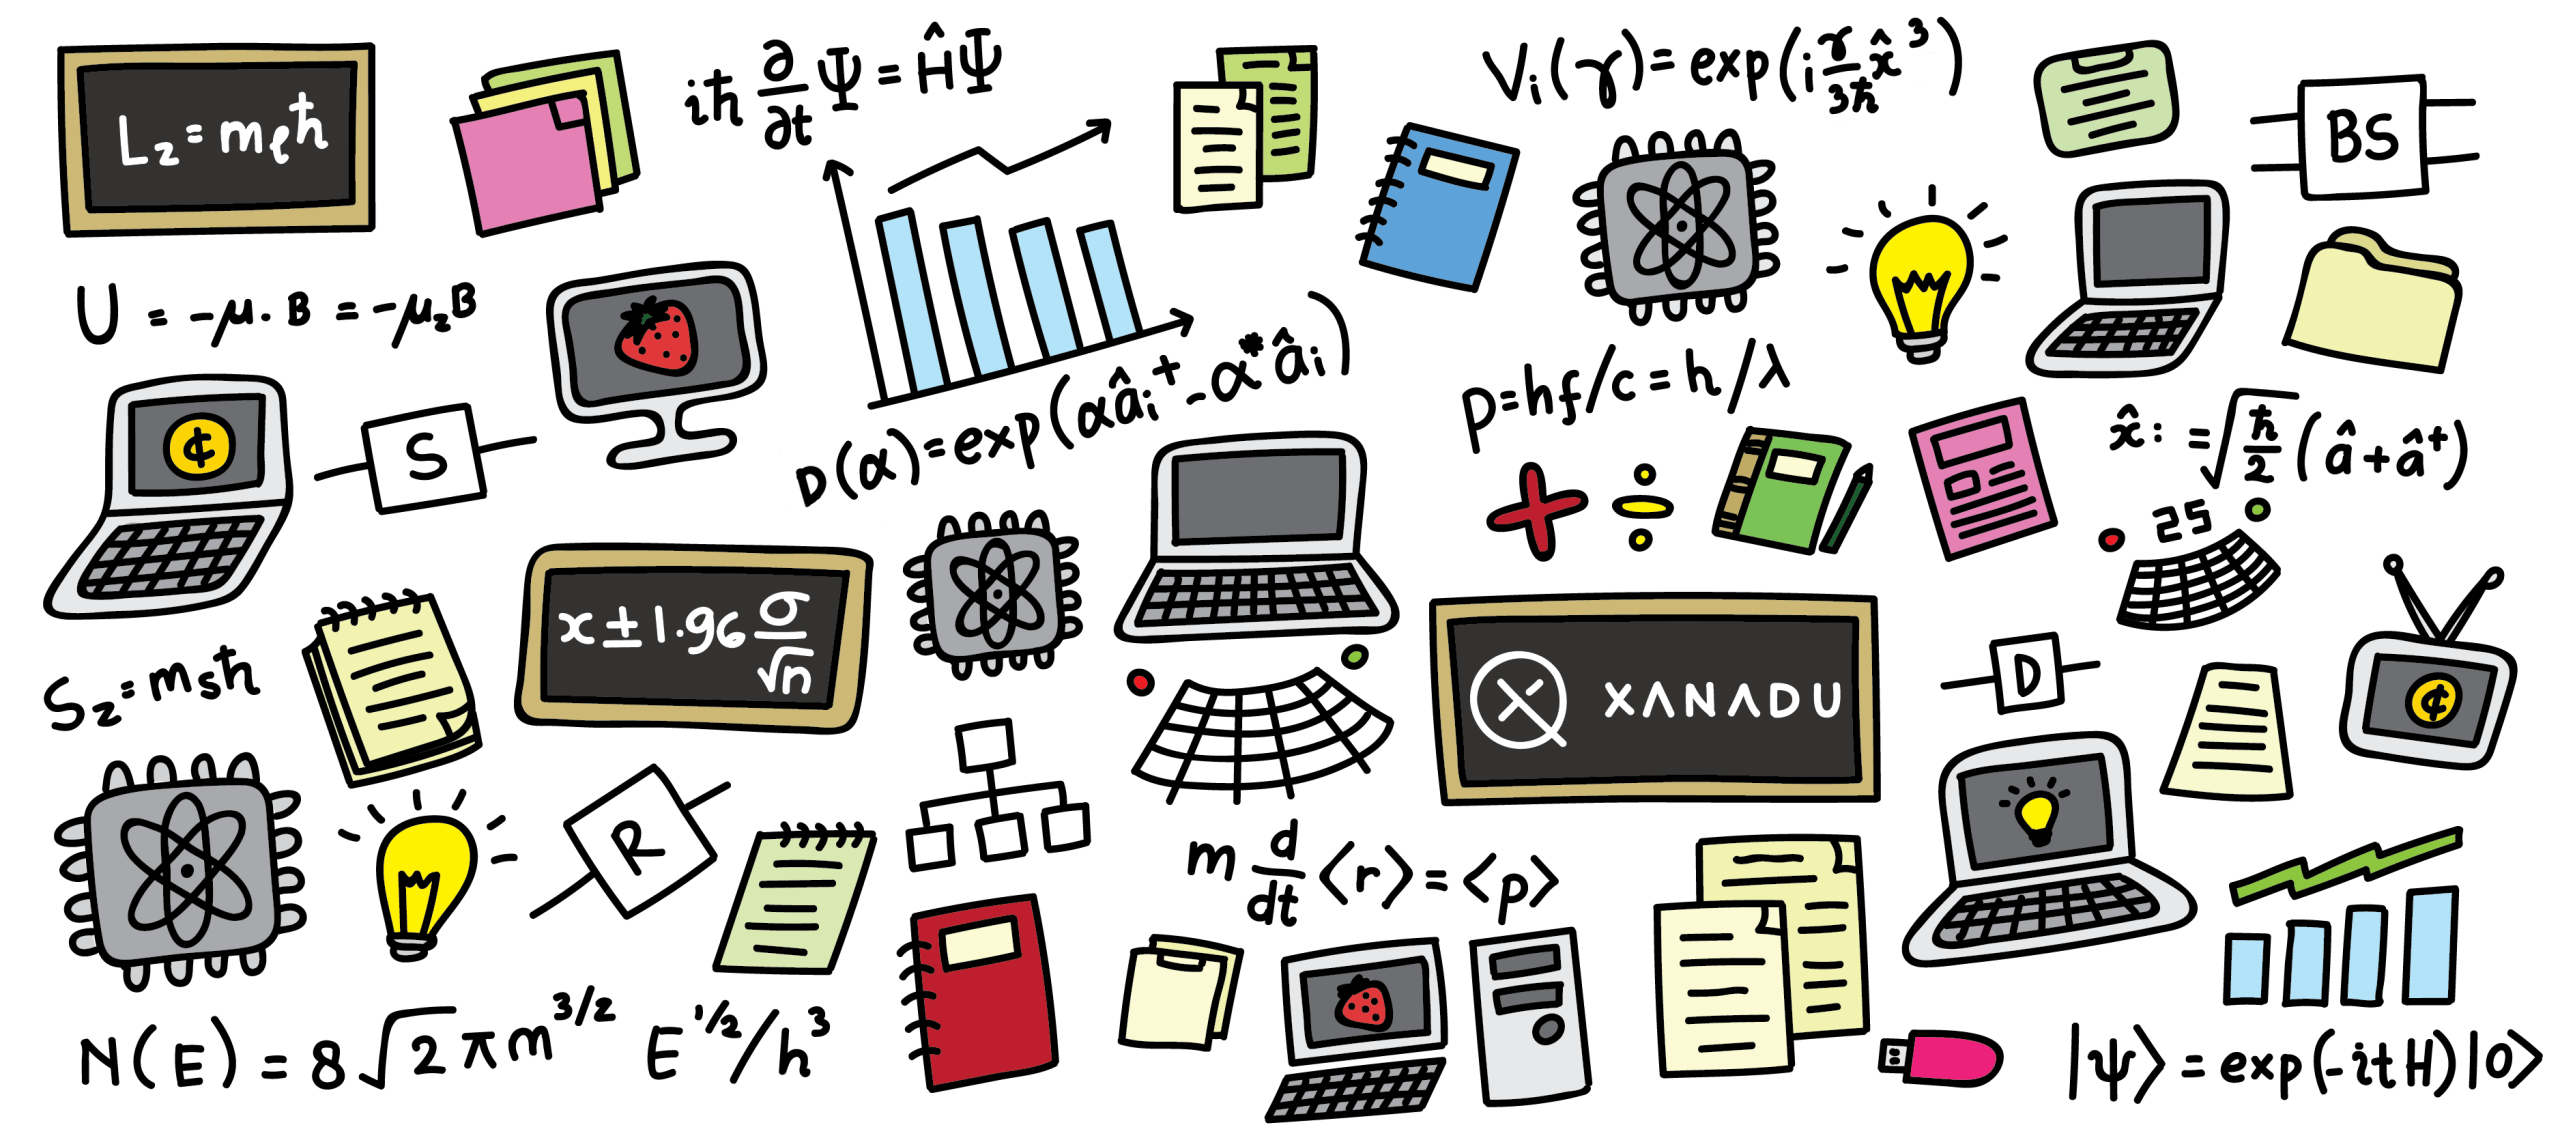 Investment In Quantum Computing Hots Up. Canada Based Xanadu Gets $100M Series B To Build Quantum Computer